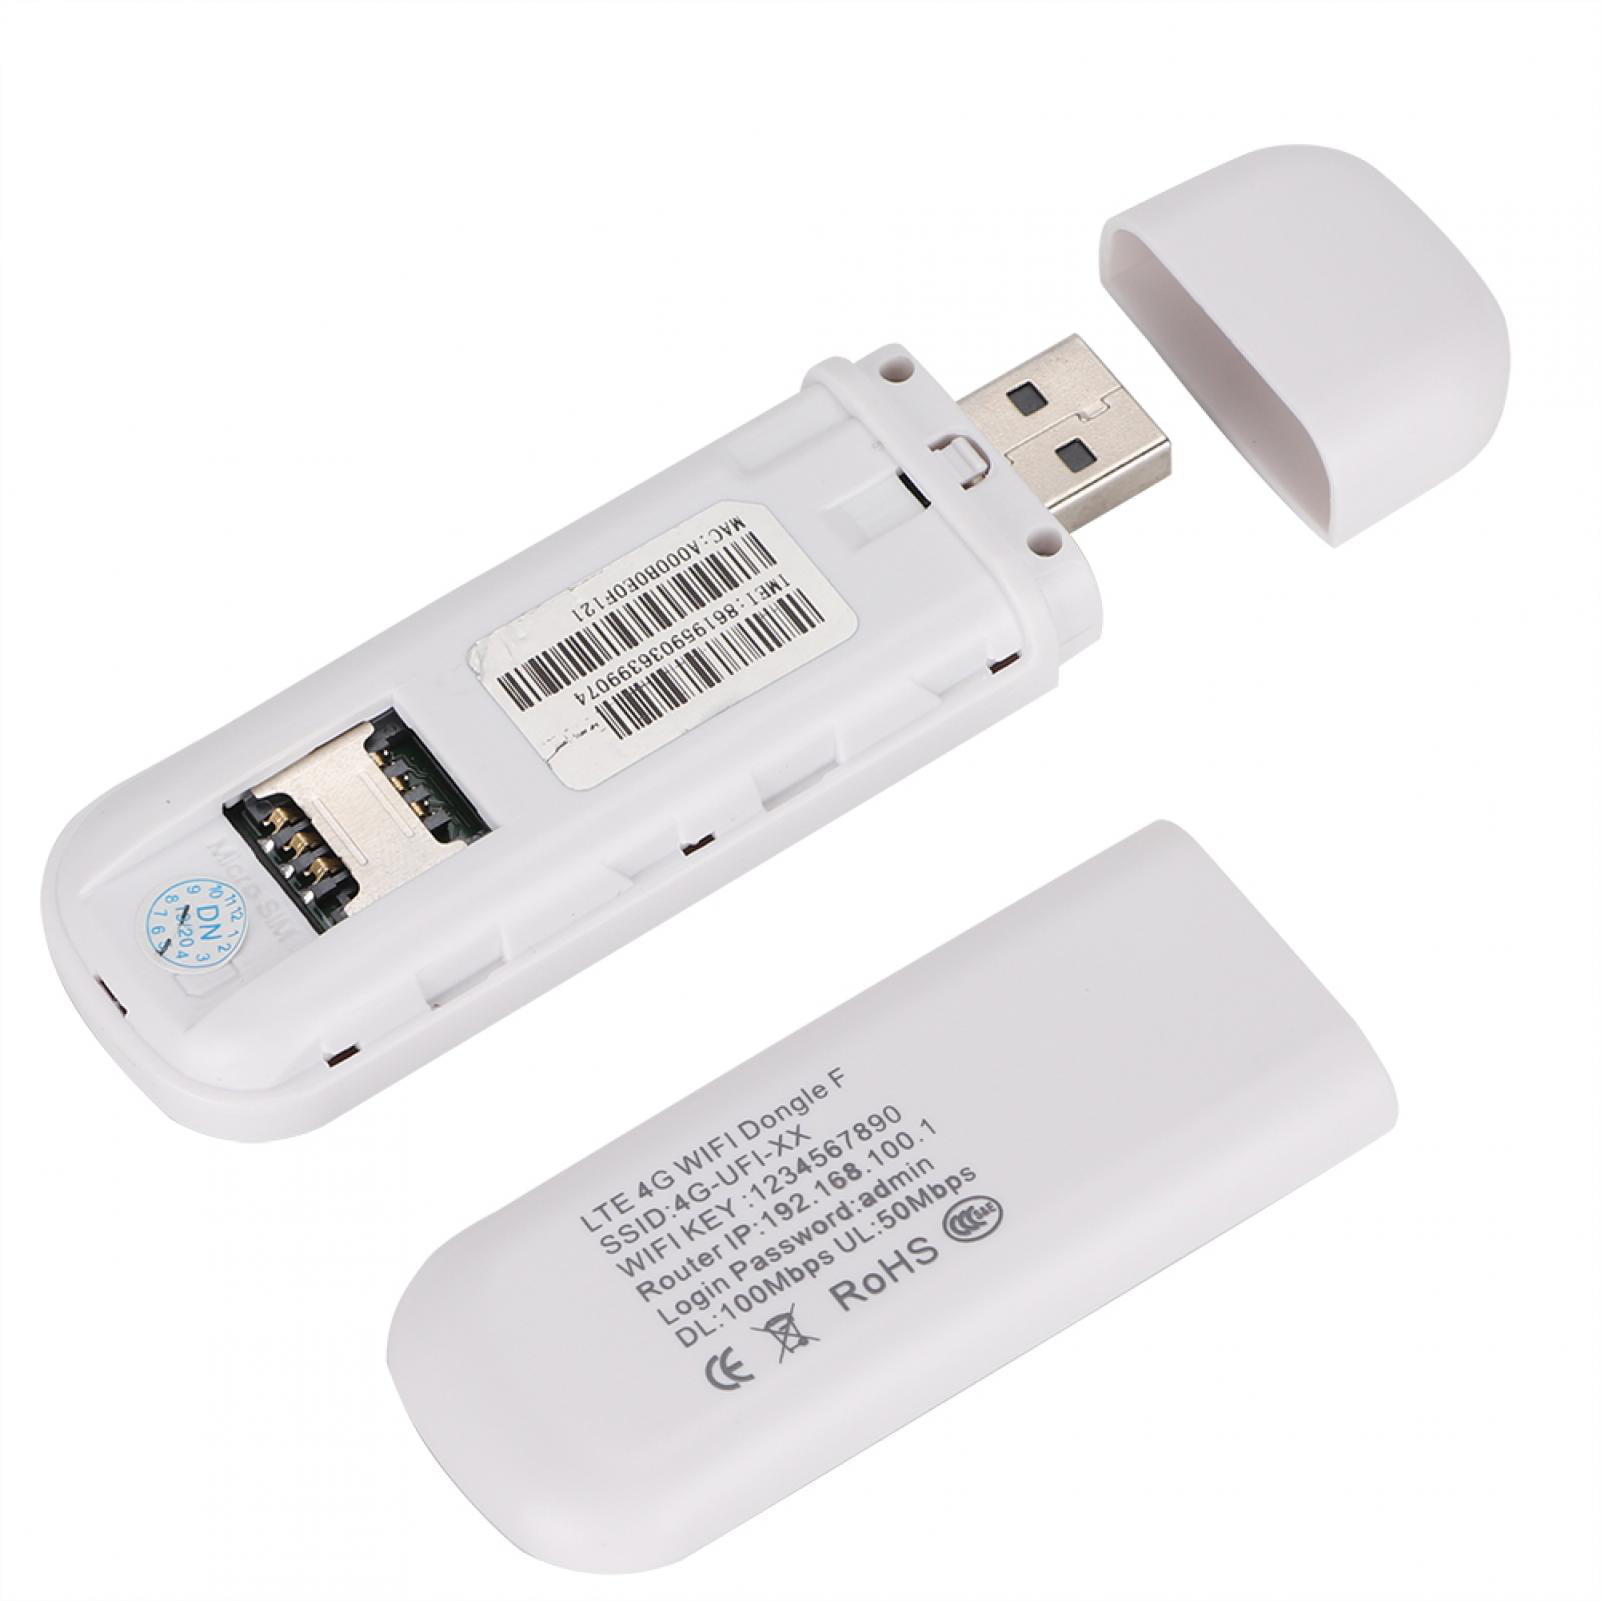 WIFI стик. SIM модем. Mikrotik USB Modem Stick. Router on a Stick. Интернет стик купить